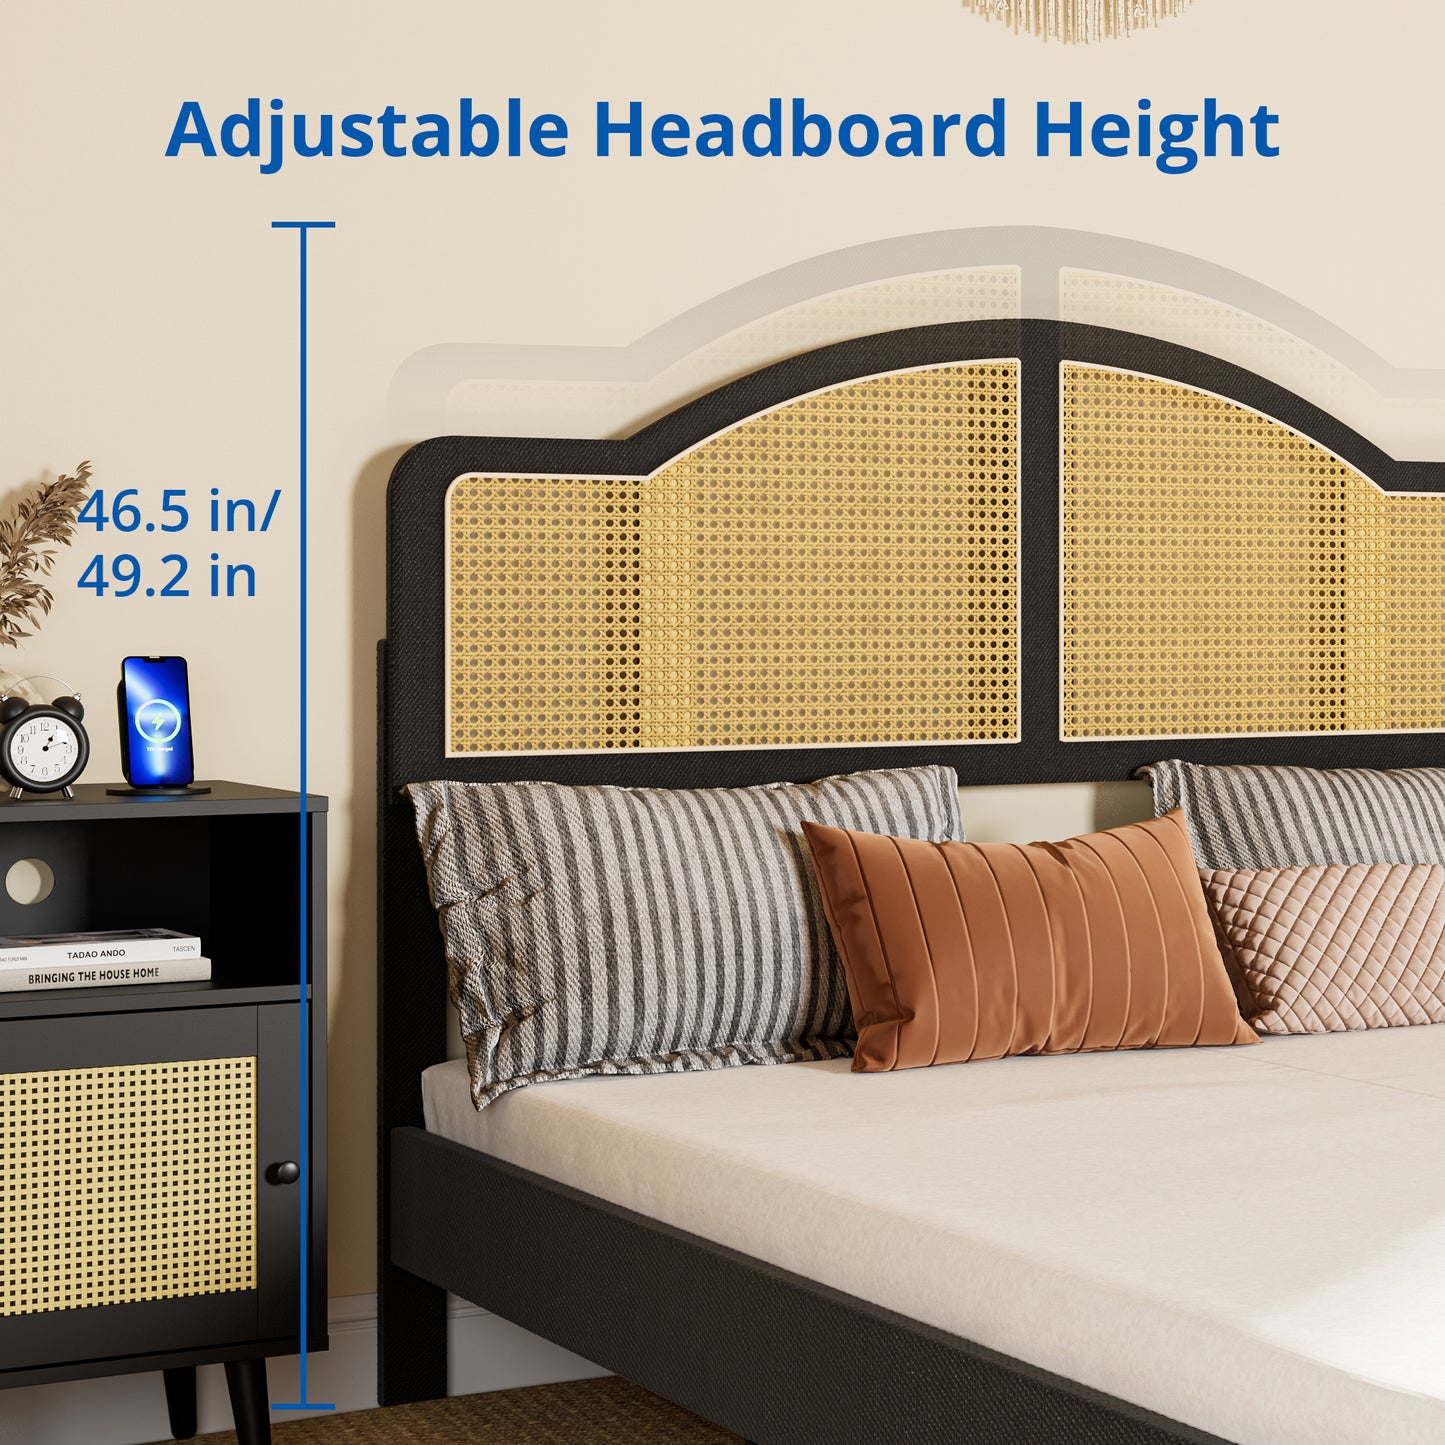 Cozy Castle Wooden Queen Size Bed Frame with Adjustable Rattan headboard, Boho Platform Bed Frame, No Box Spring Needed, Black